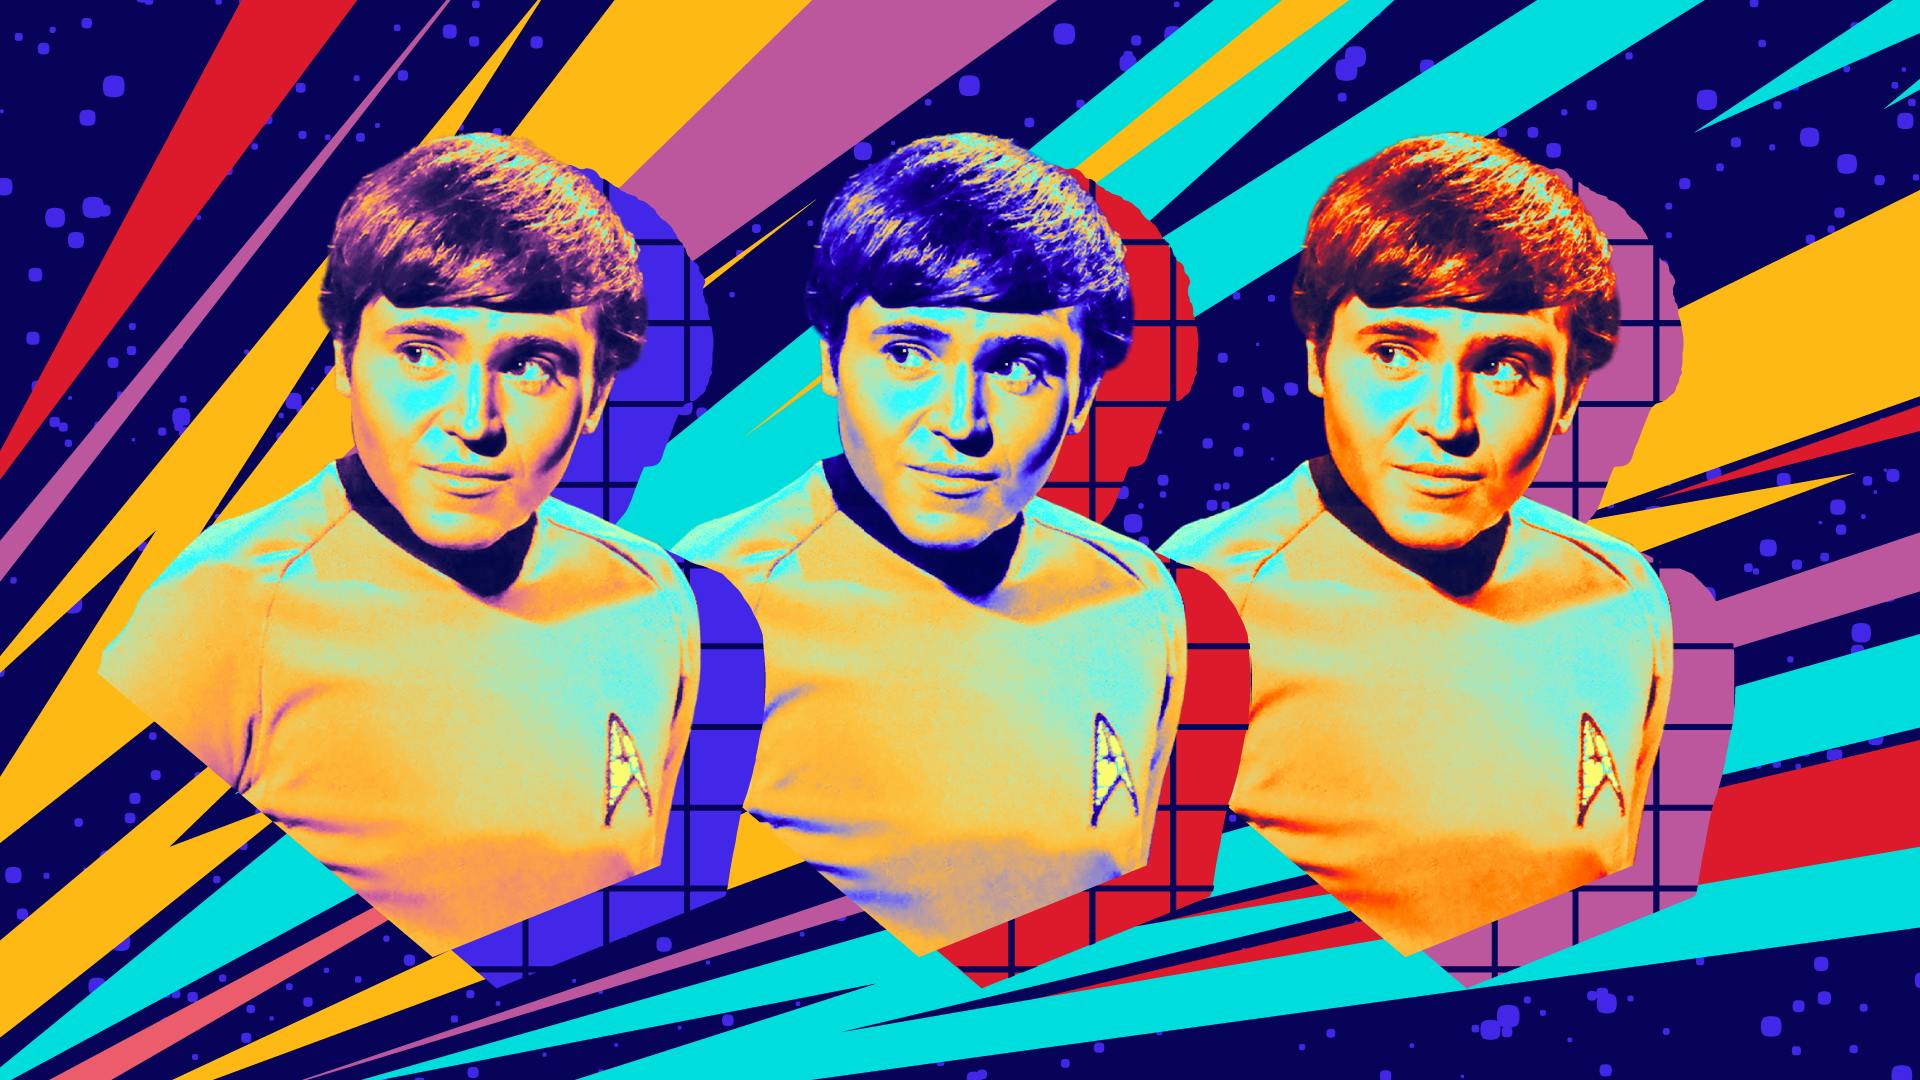 Stylized asset of Pavel Chekov as seen in Star Trek: The Original Series